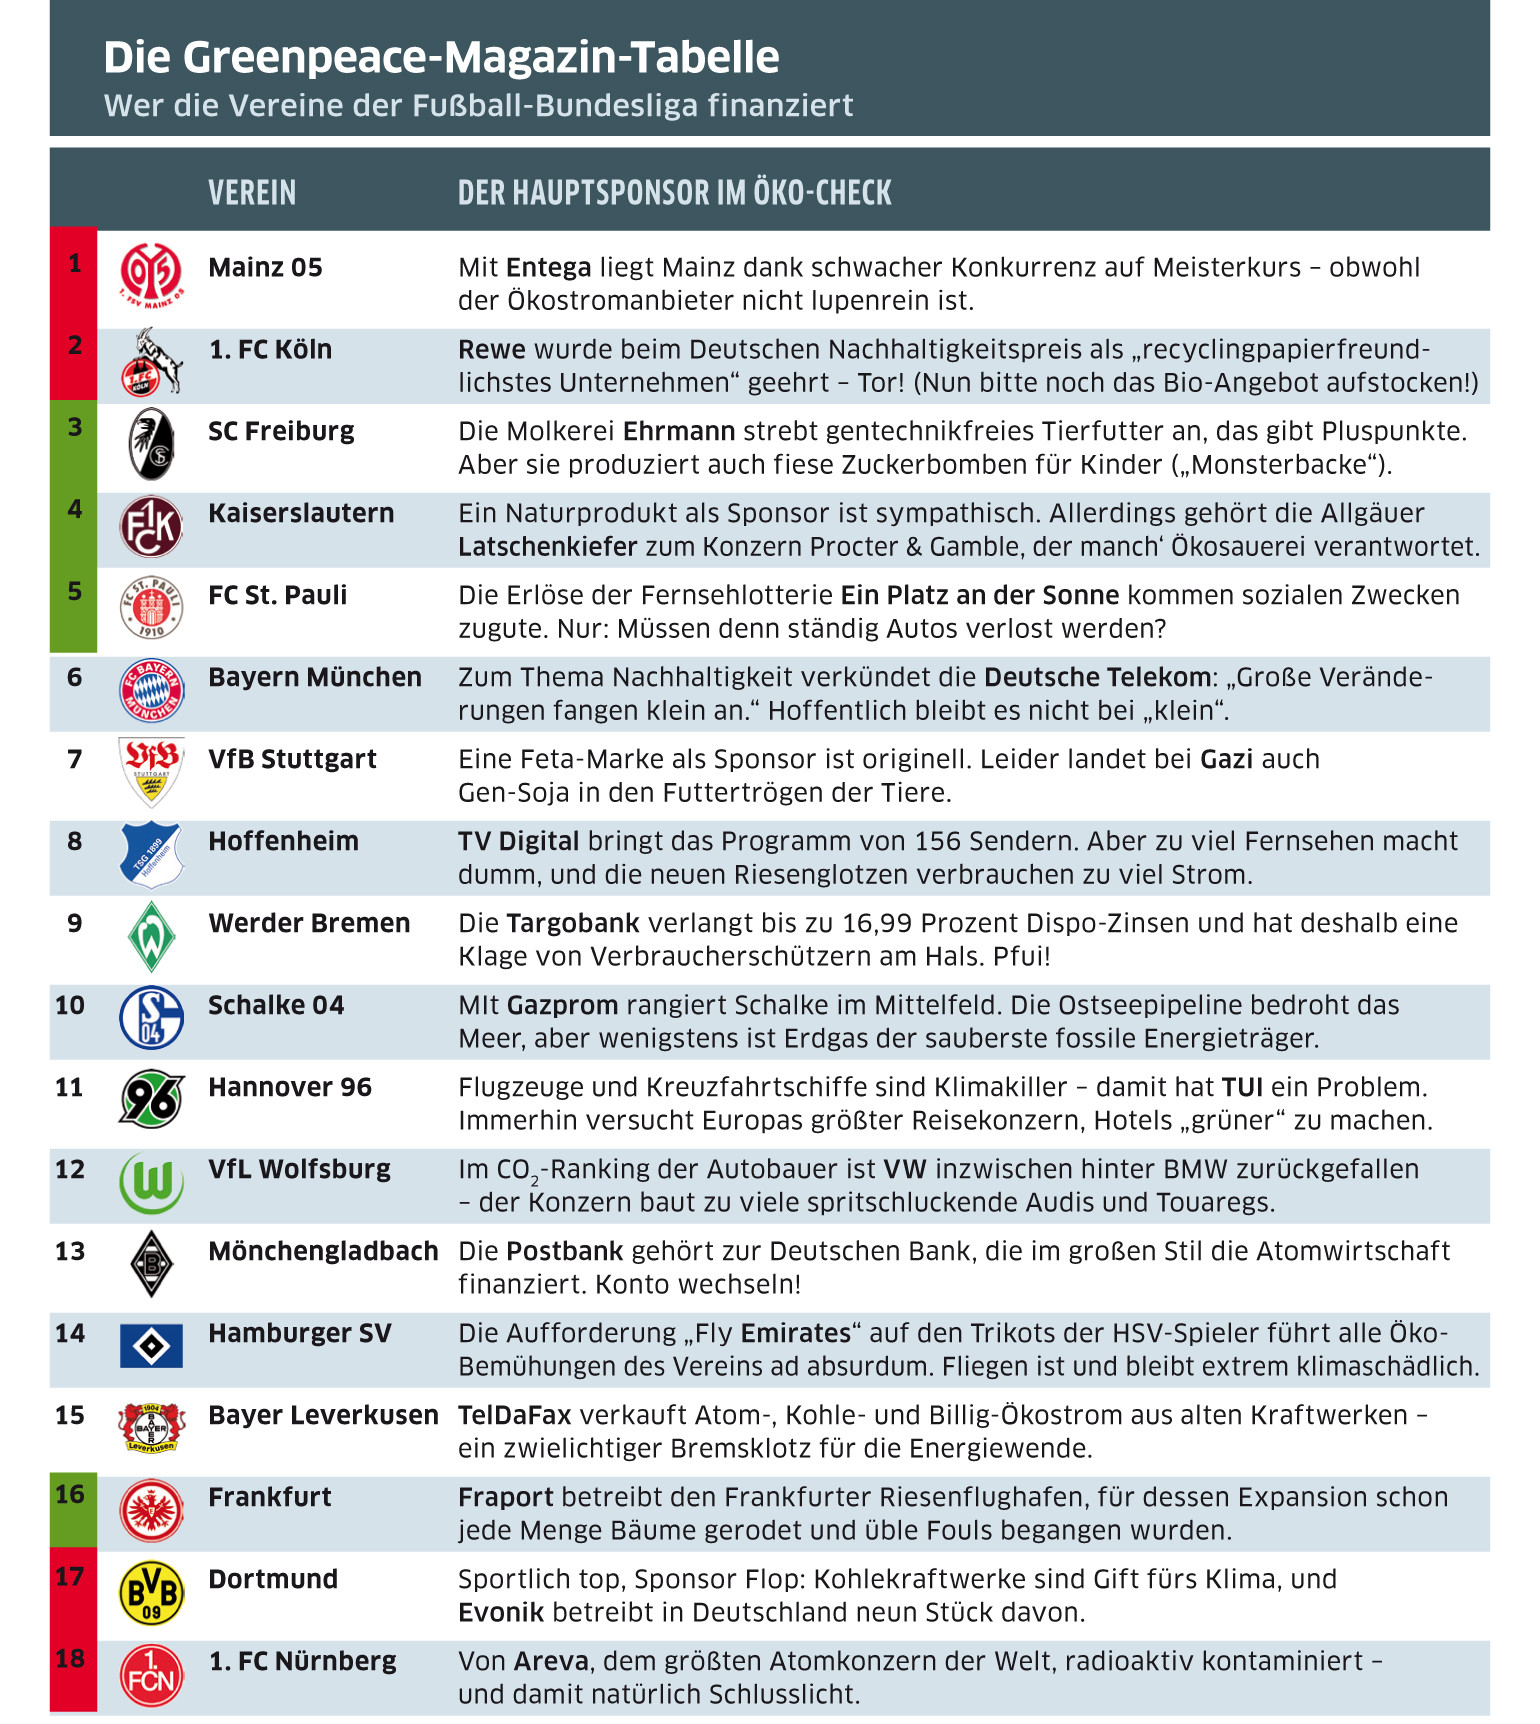 Tabelle Fußball
 Bundesliga Tabelle des Greenpeace Magazins Mainz 05 auf